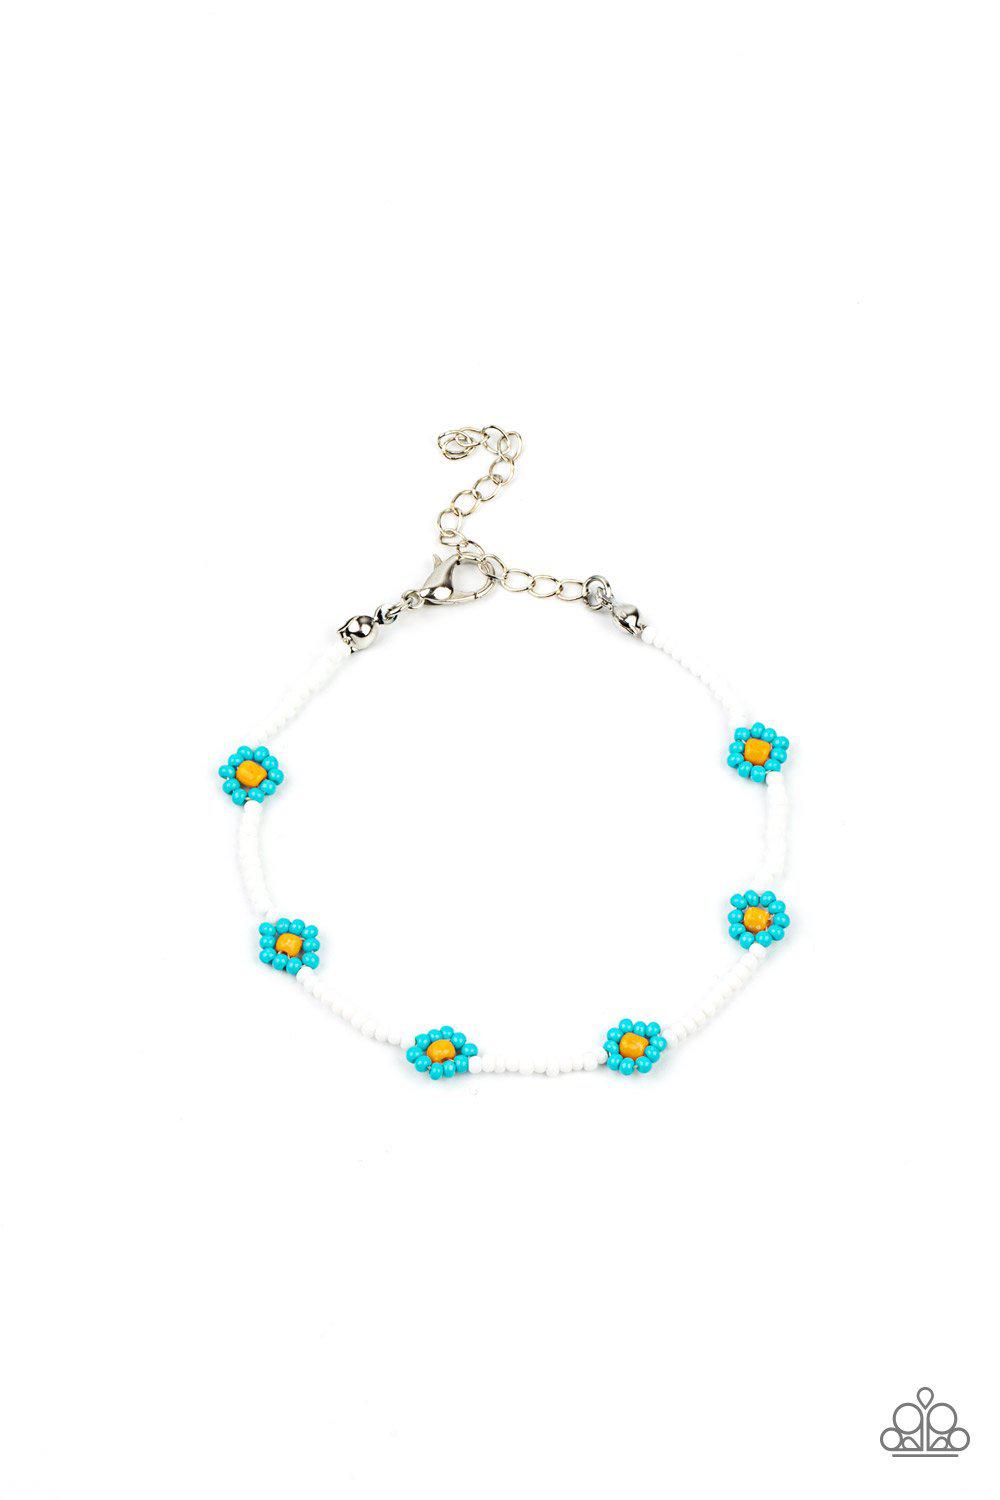 Camp Flower Power Blue Flower Bracelet - Paparazzi Accessories- lightbox - CarasShop.com - $5 Jewelry by Cara Jewels